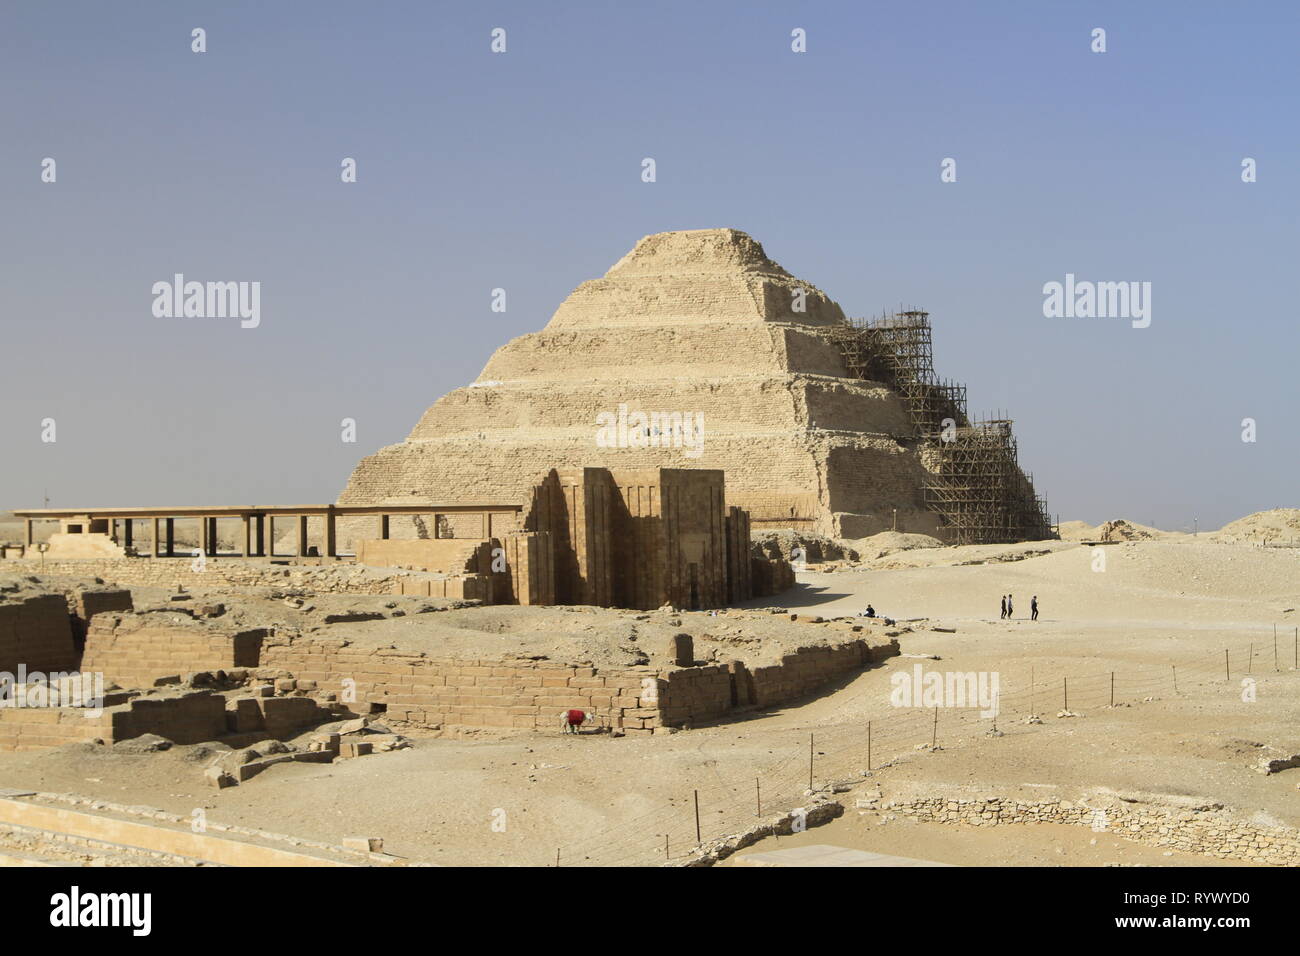 La pyramide de Djoser en cours de restauration, Saqqara, le gouvernorat de Giza, Egypte Banque D'Images